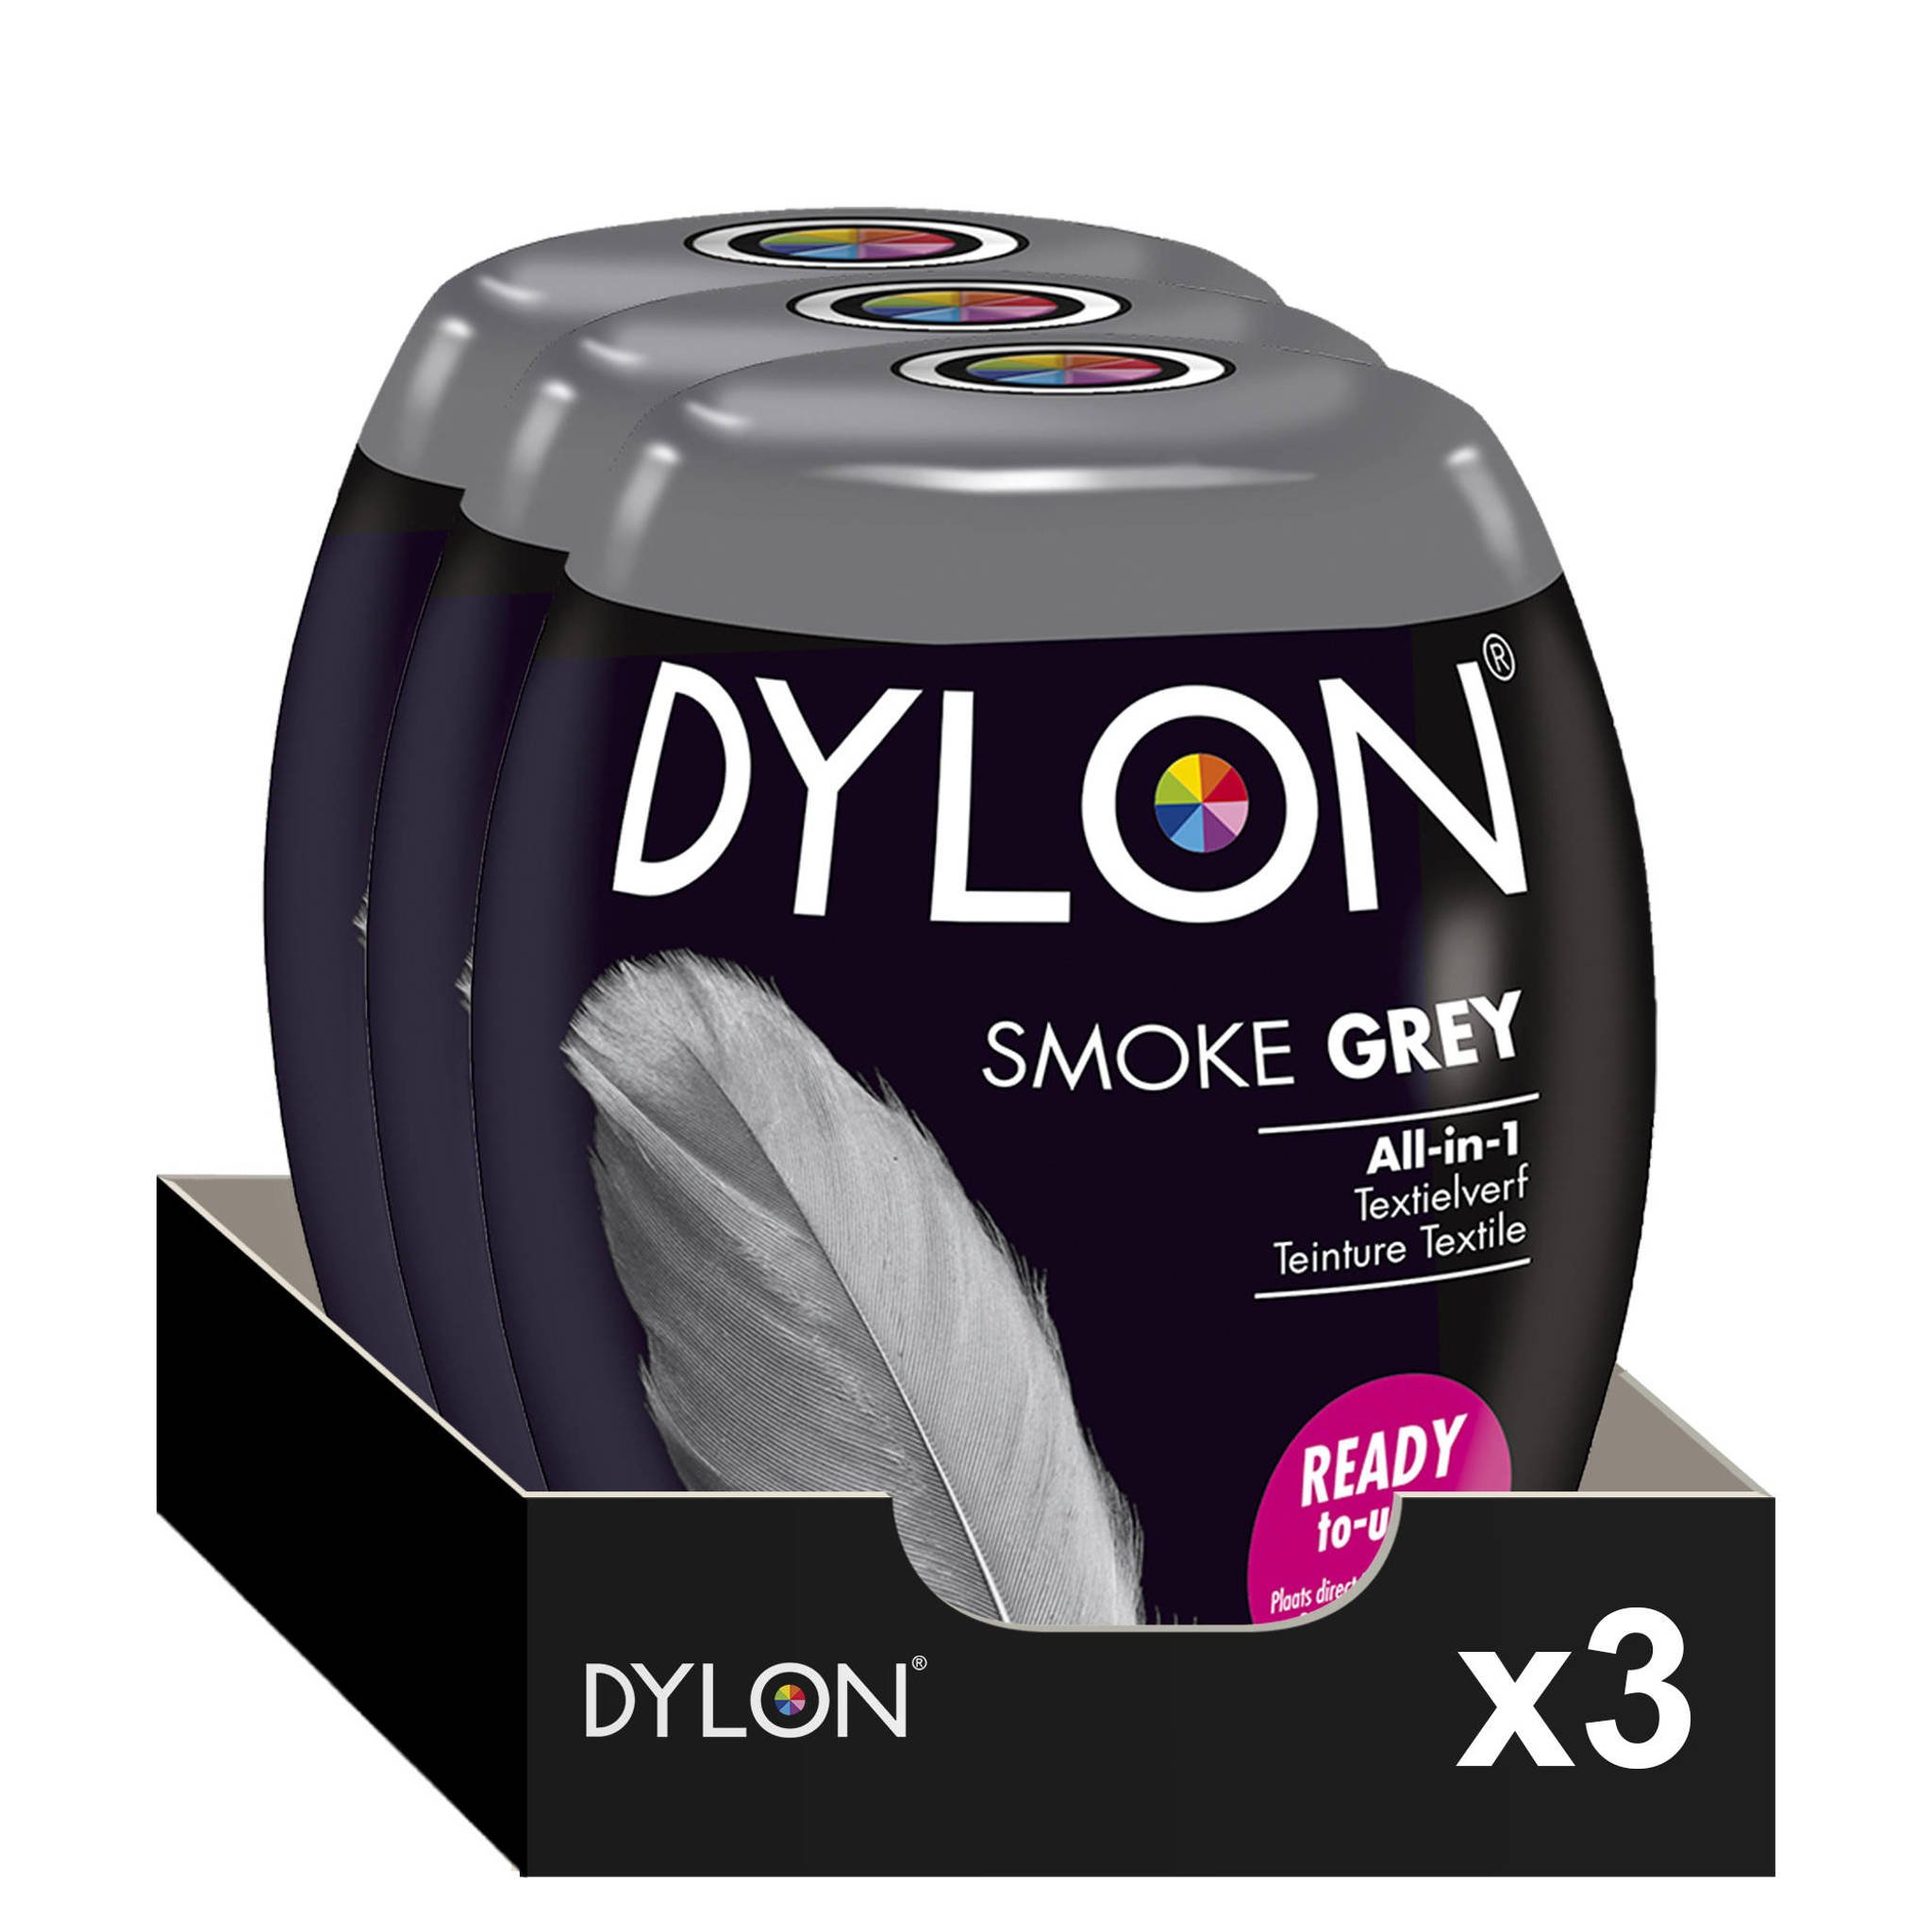 Fabriek Verheugen seks Dylon Pod - Smoke Grey textielverf - 350 gram | wehkamp